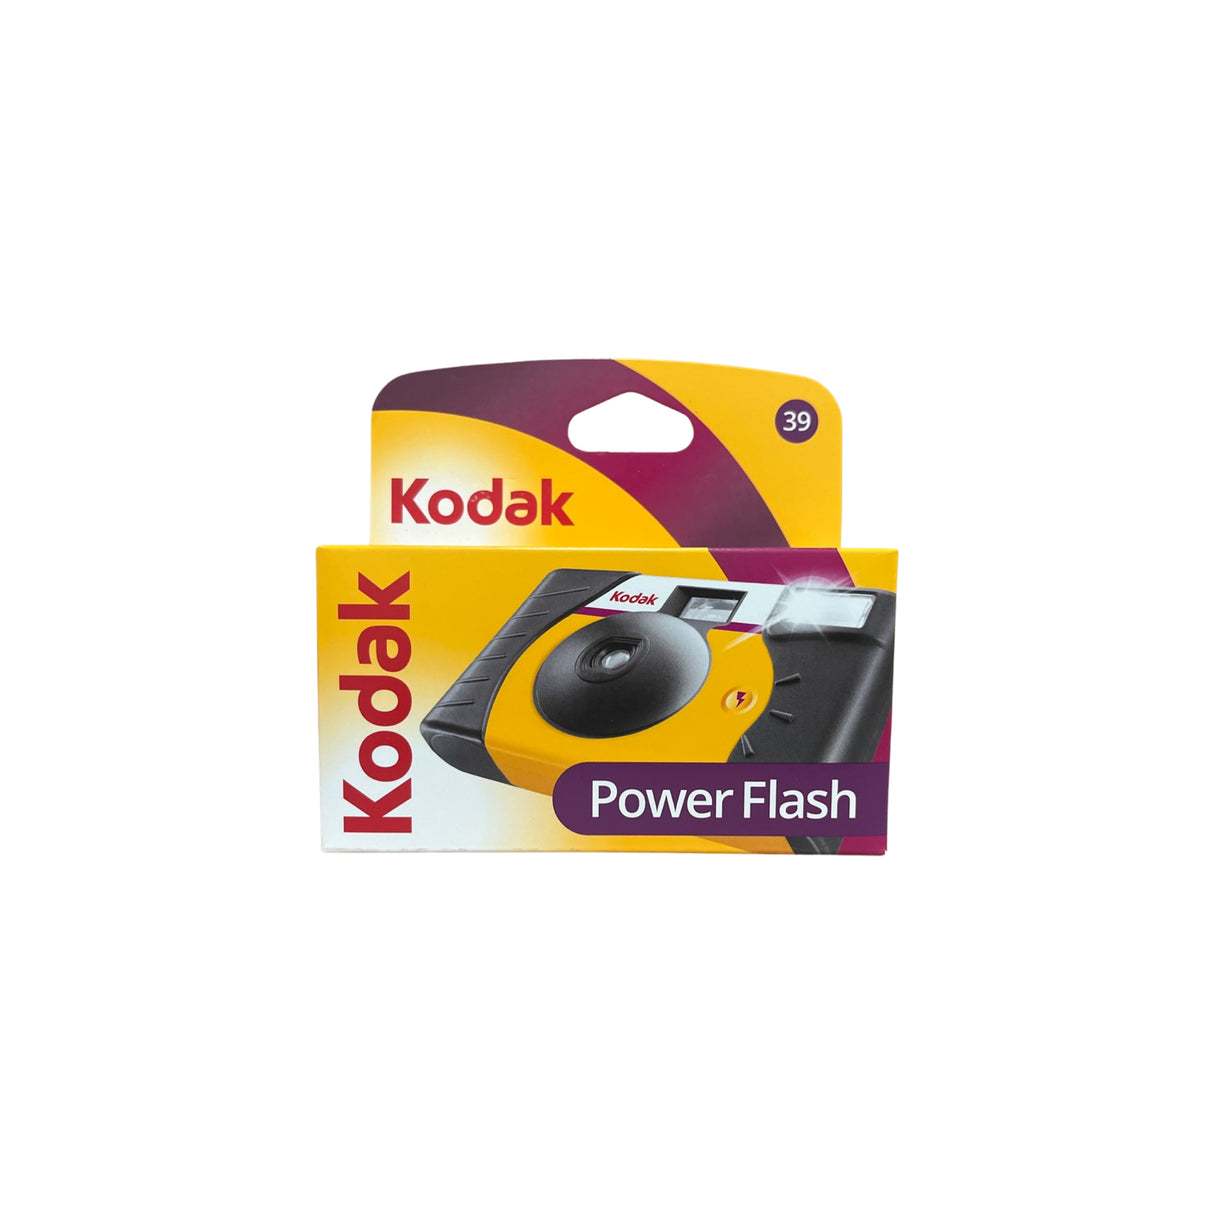 Kodak Power Flash single use camera